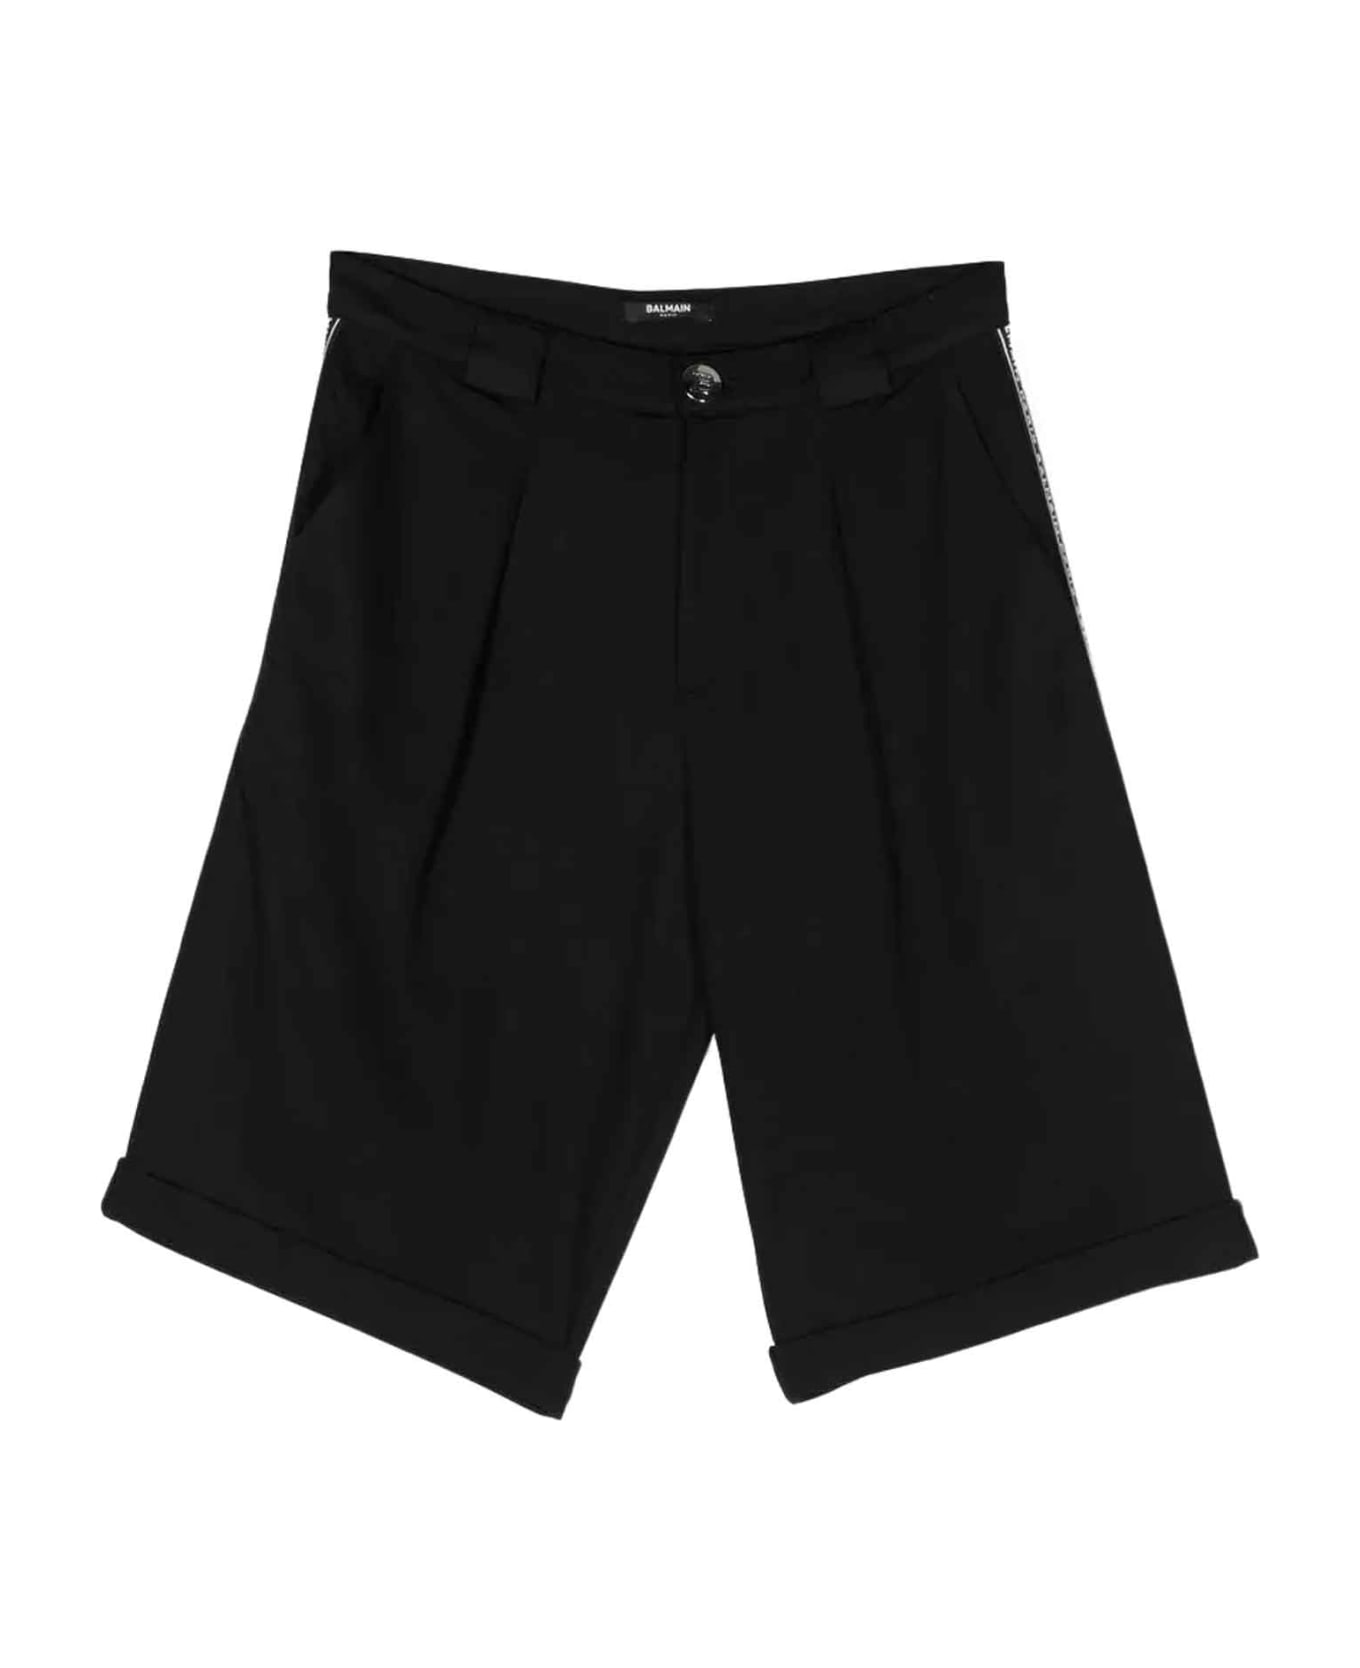 Balmain Black Bermuda Shorts Unisex - Nero